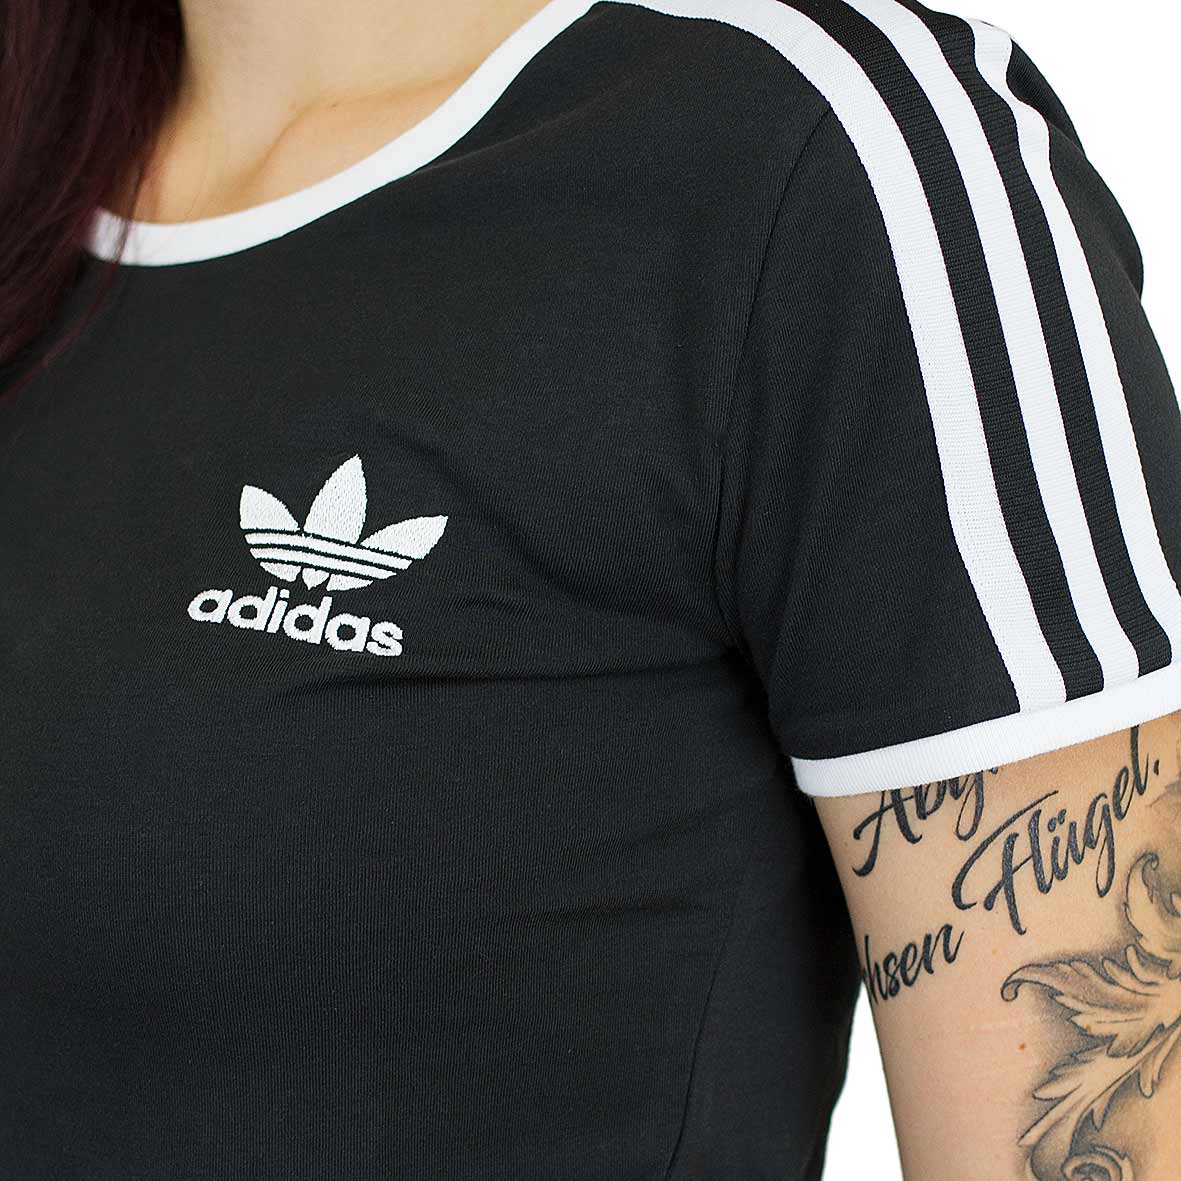 ☆ Adidas Originals Damen T-Shirt Sandra 1977 schwarz - hier bestellen!